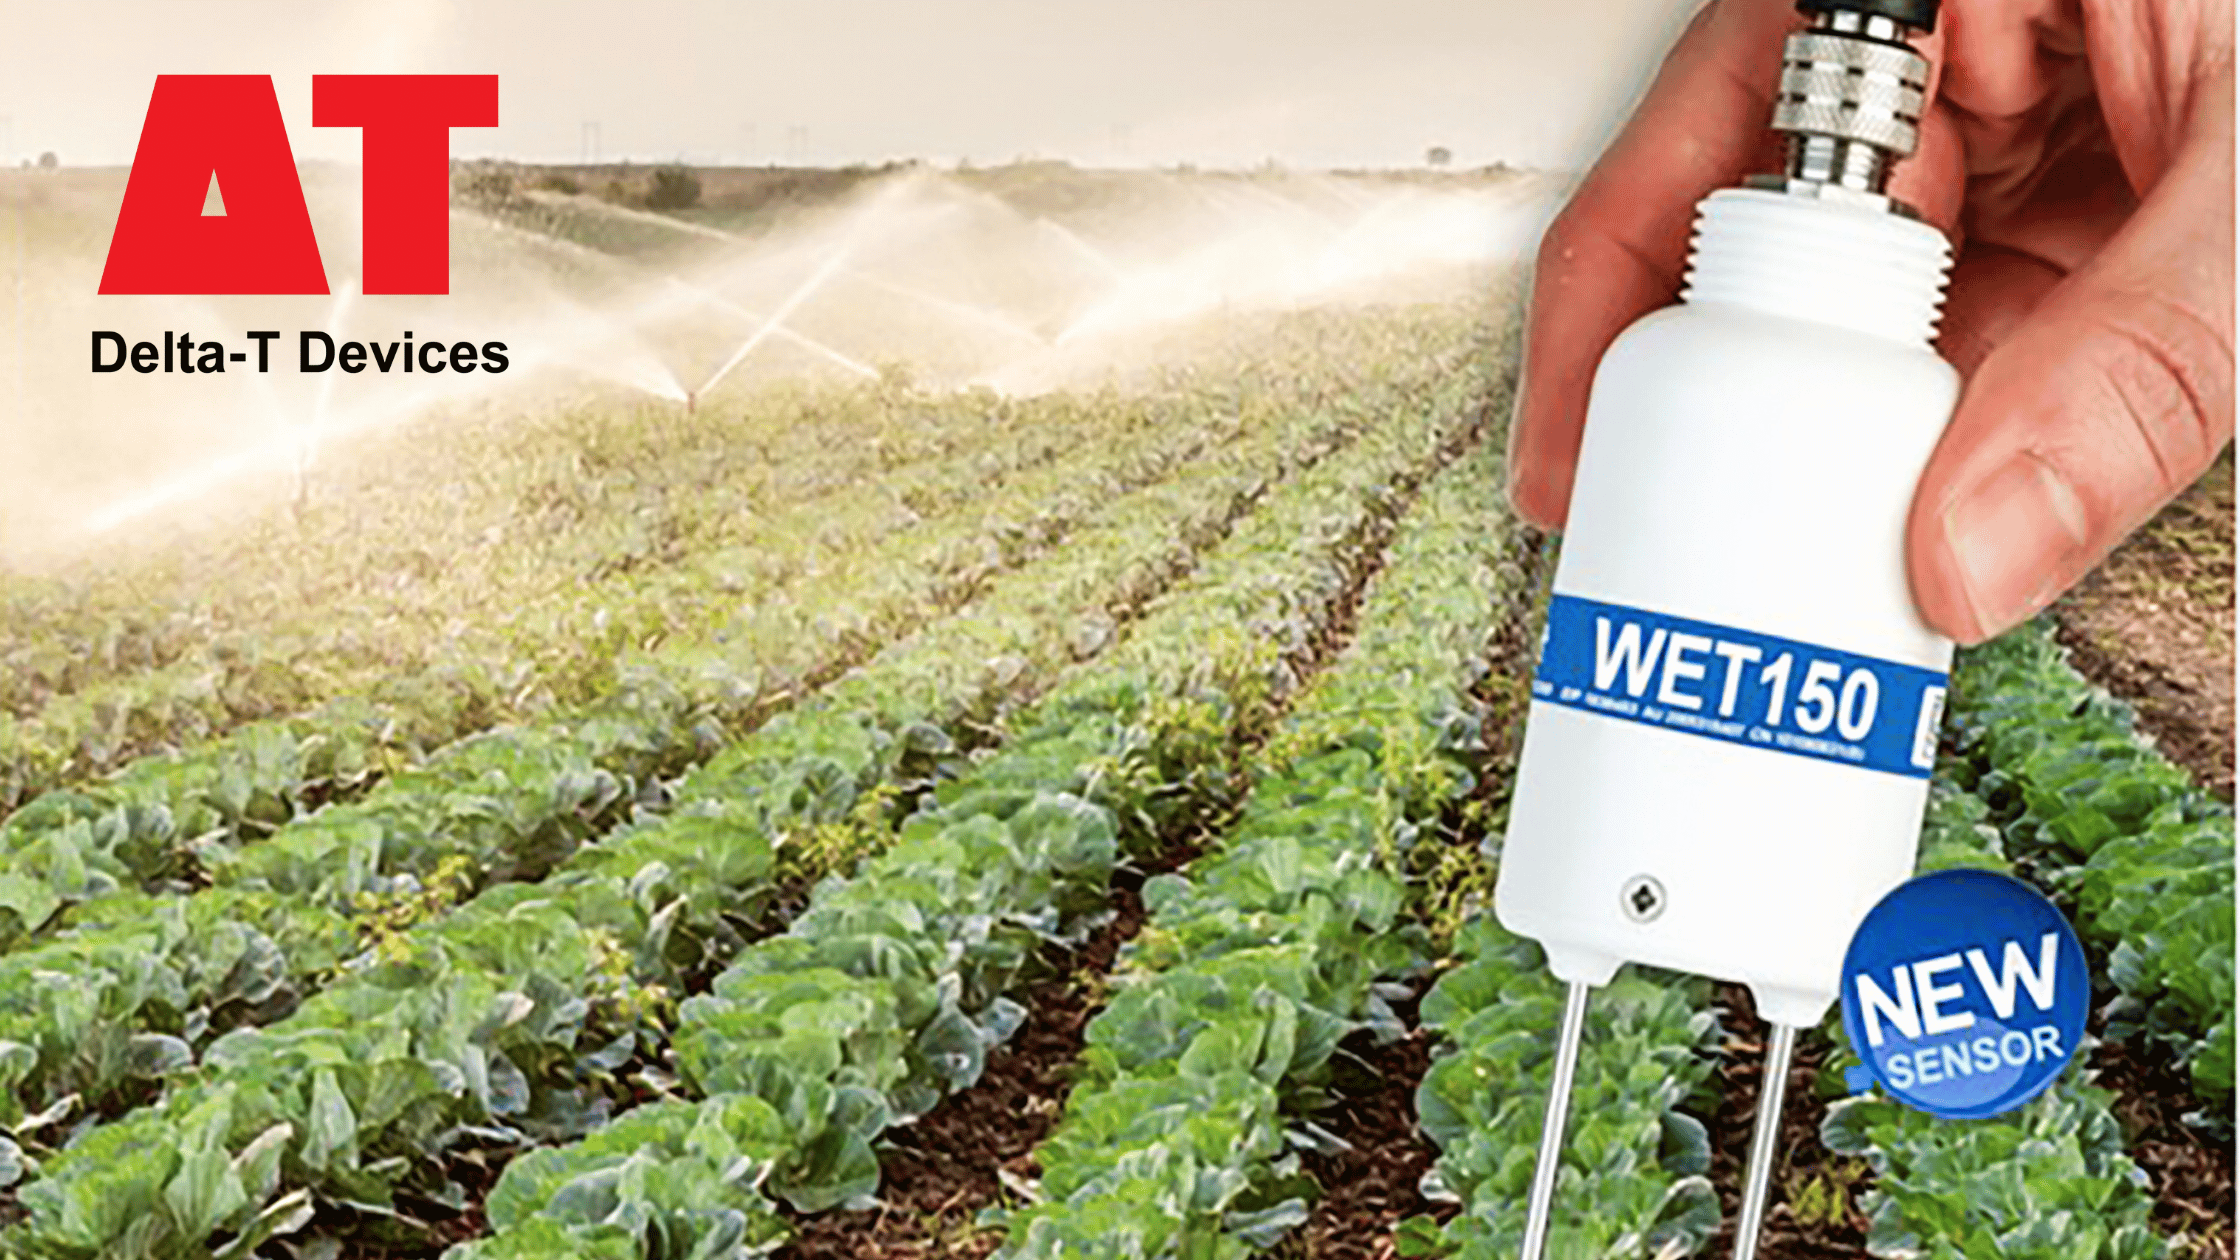 All About the New Digital Multi-Parameter WET150 Soil Sensor